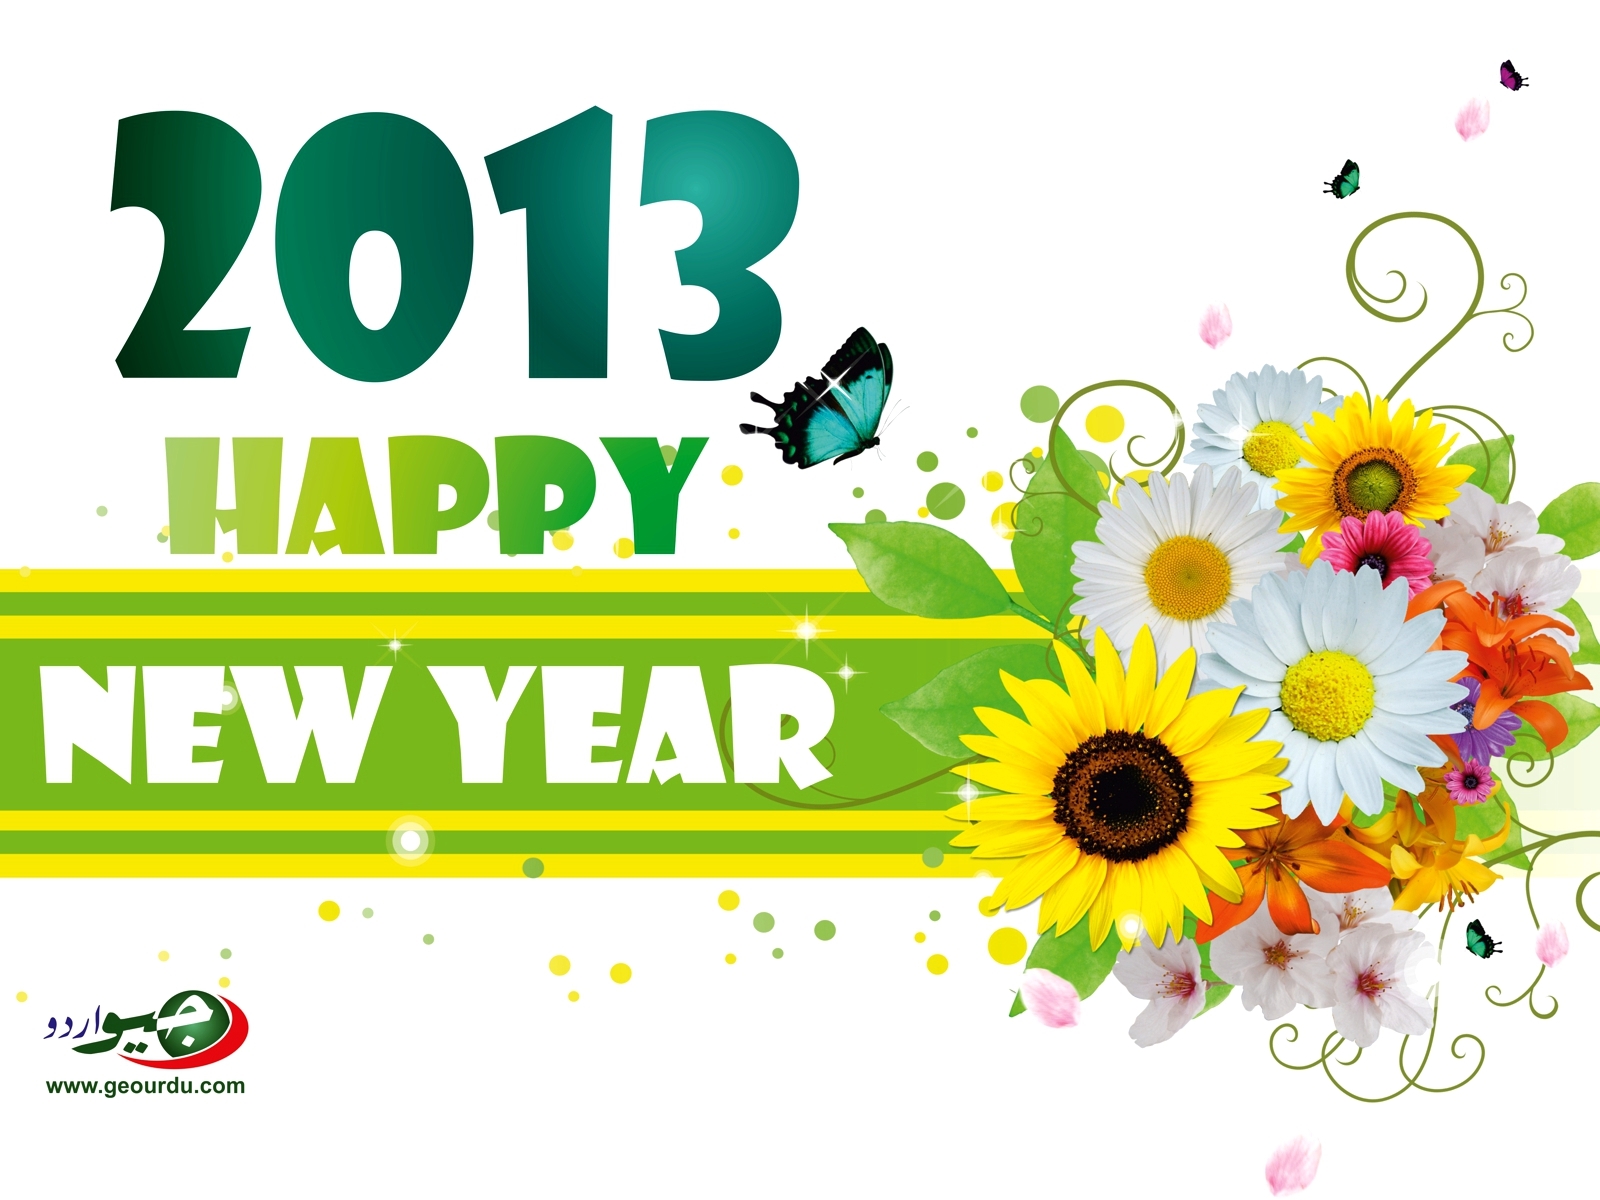 Lovelfc's Blog: HAPPY NEW YEAR 2013